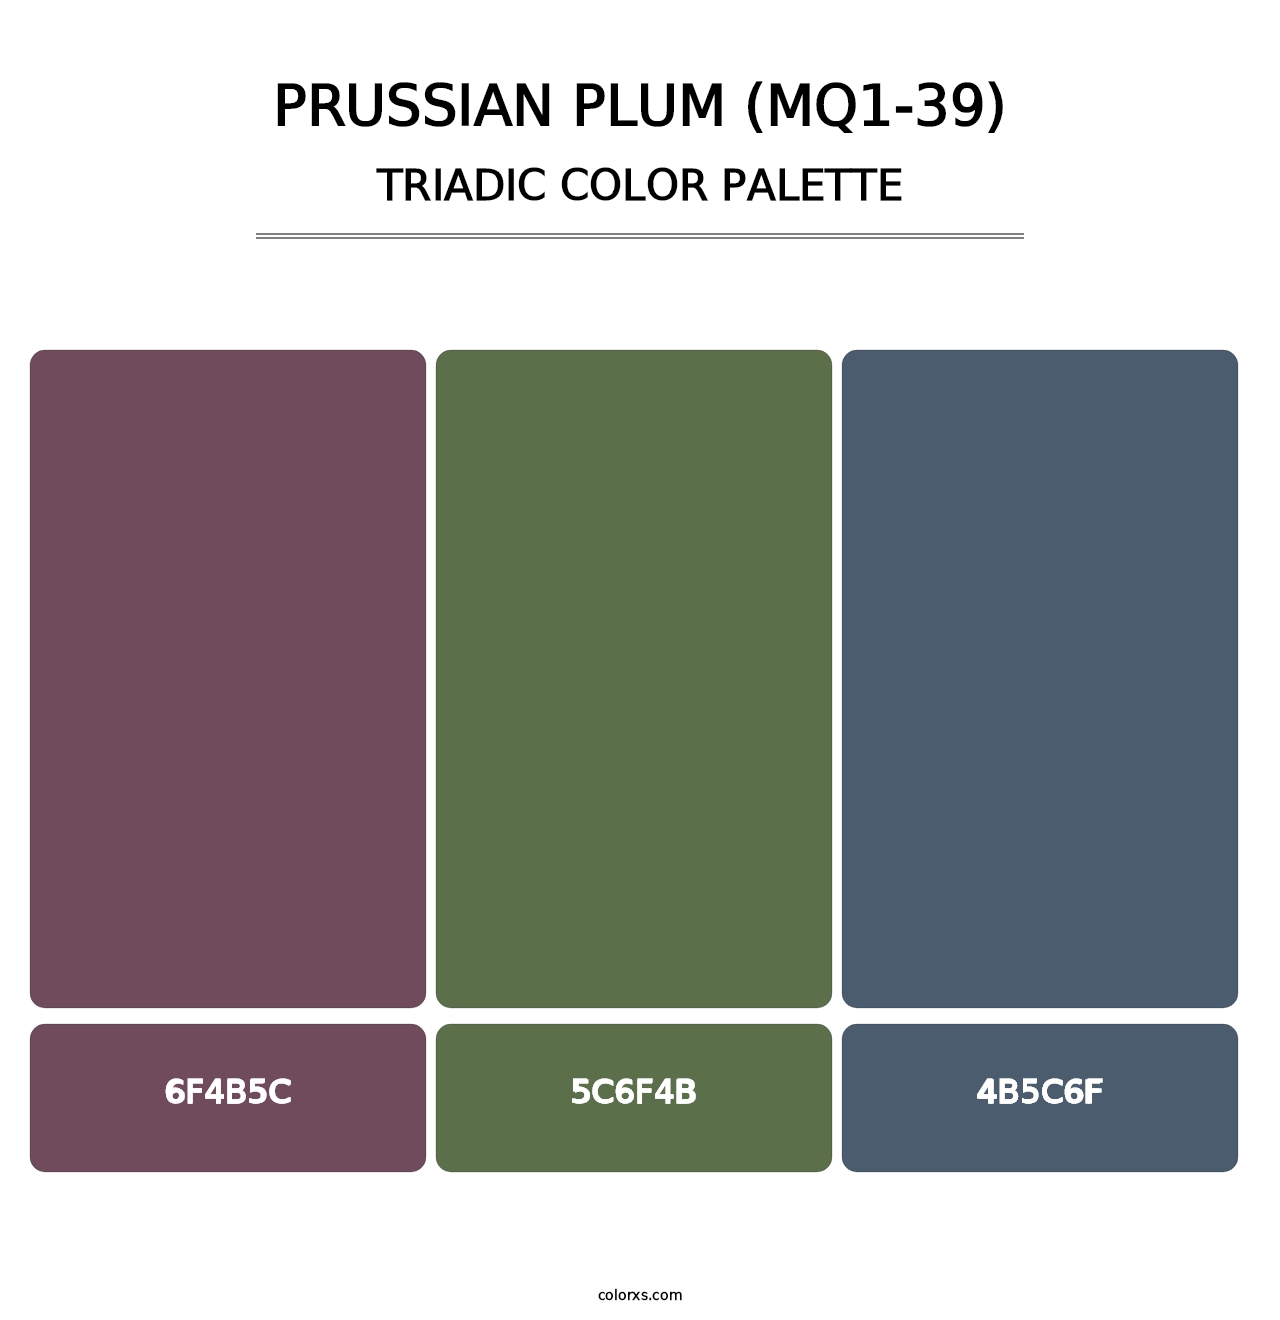 Prussian Plum (MQ1-39) - Triadic Color Palette